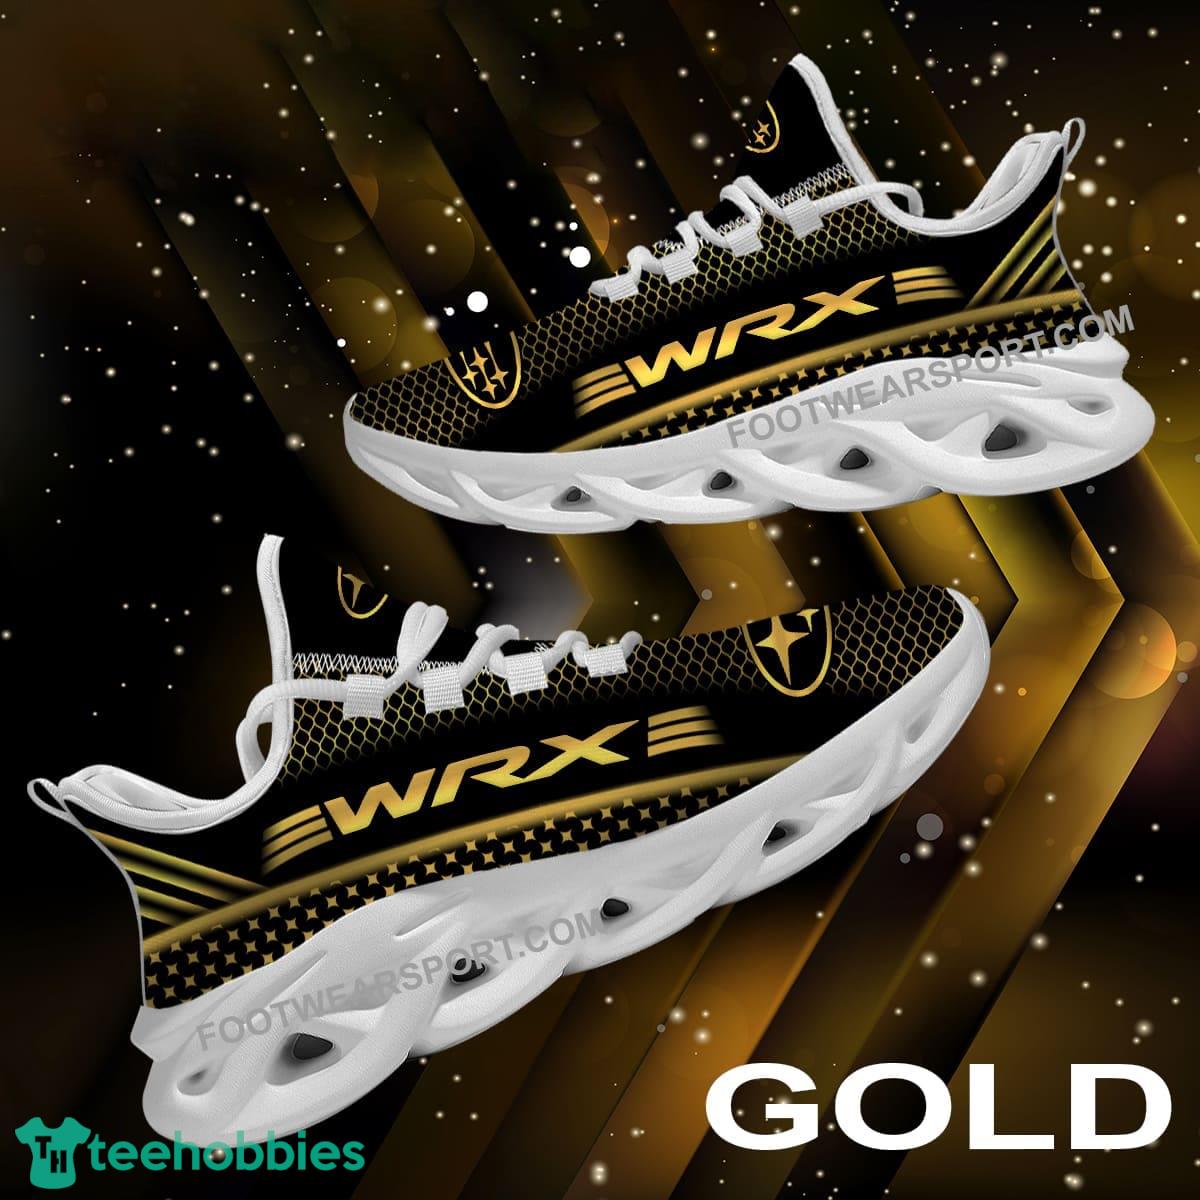 Subaru WRX Sti Racing Max Soul Shoes Gold Chunky Sneaker Trademark For Fans Gift - Subaru WRX Sti Racing Max Soul Shoes Gold Chunky Sneaker Trademark For Fans Gift